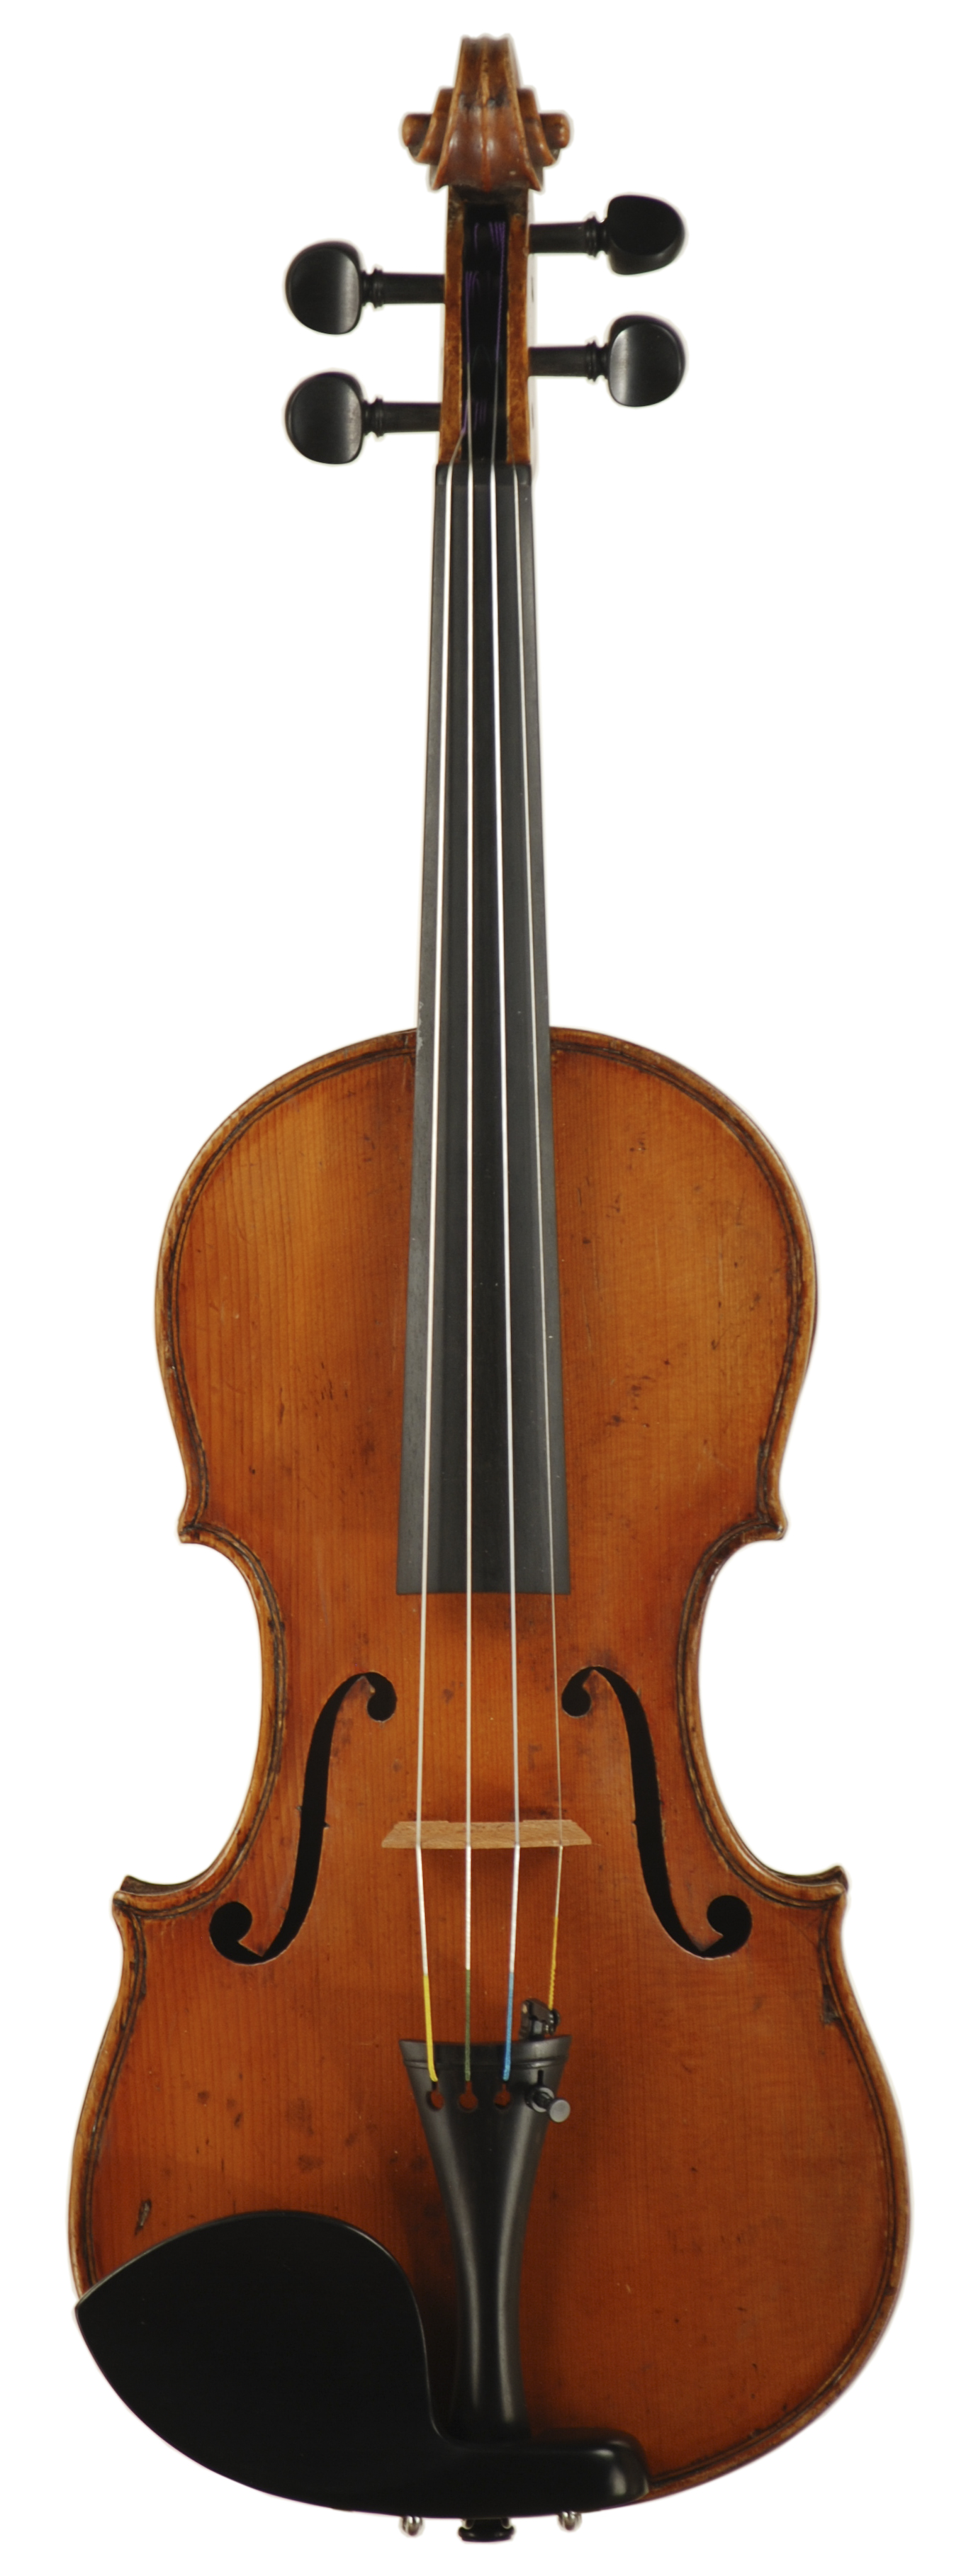 Meyella El aparato Vigilante Italian Violin Attributed to Luigi Rovatti, Circa 1900-1910 – Gorgeous Warm  Sound! | J.R. Judd Violins